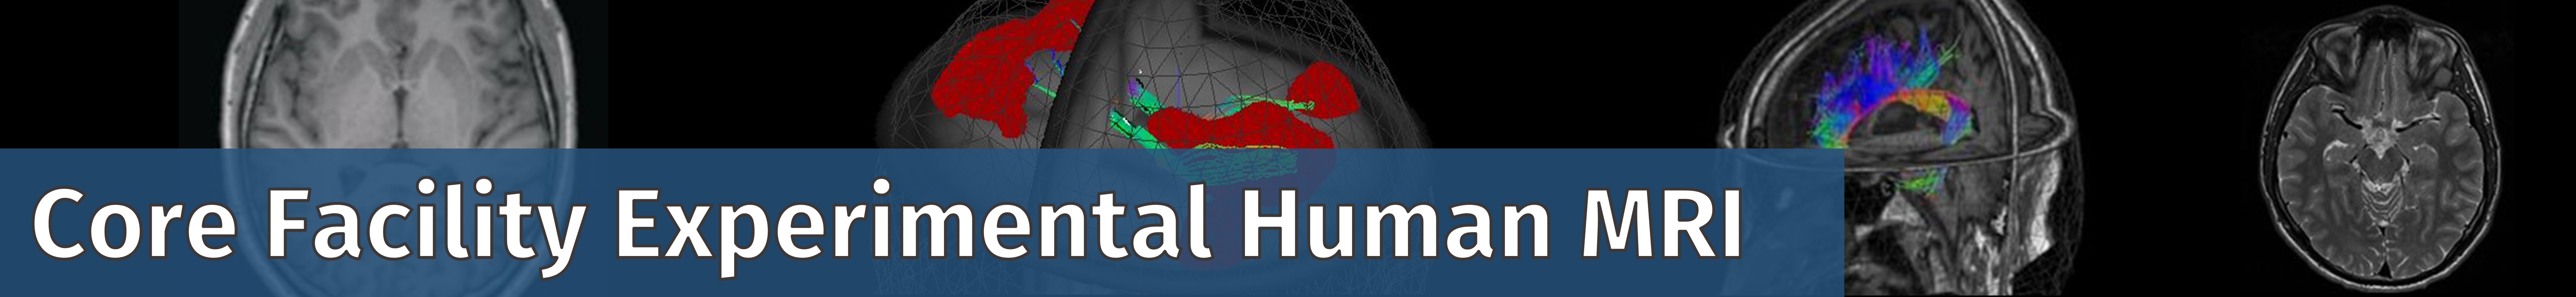 Bannertitel der CF Experimental Human MRI